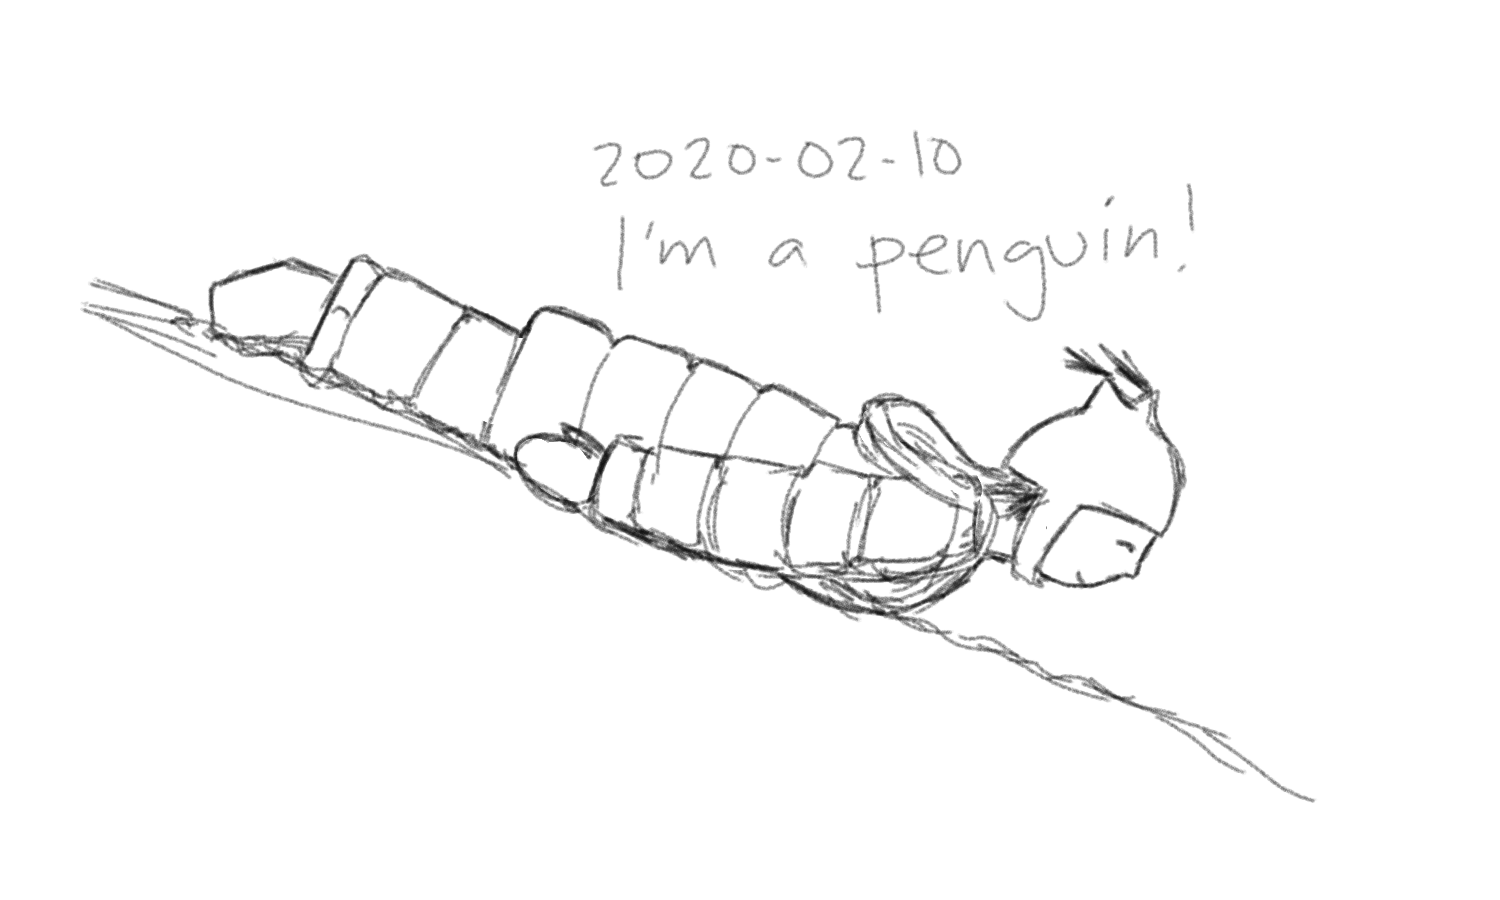 2020-02-10 I'm a penguin #moment #sketch.png